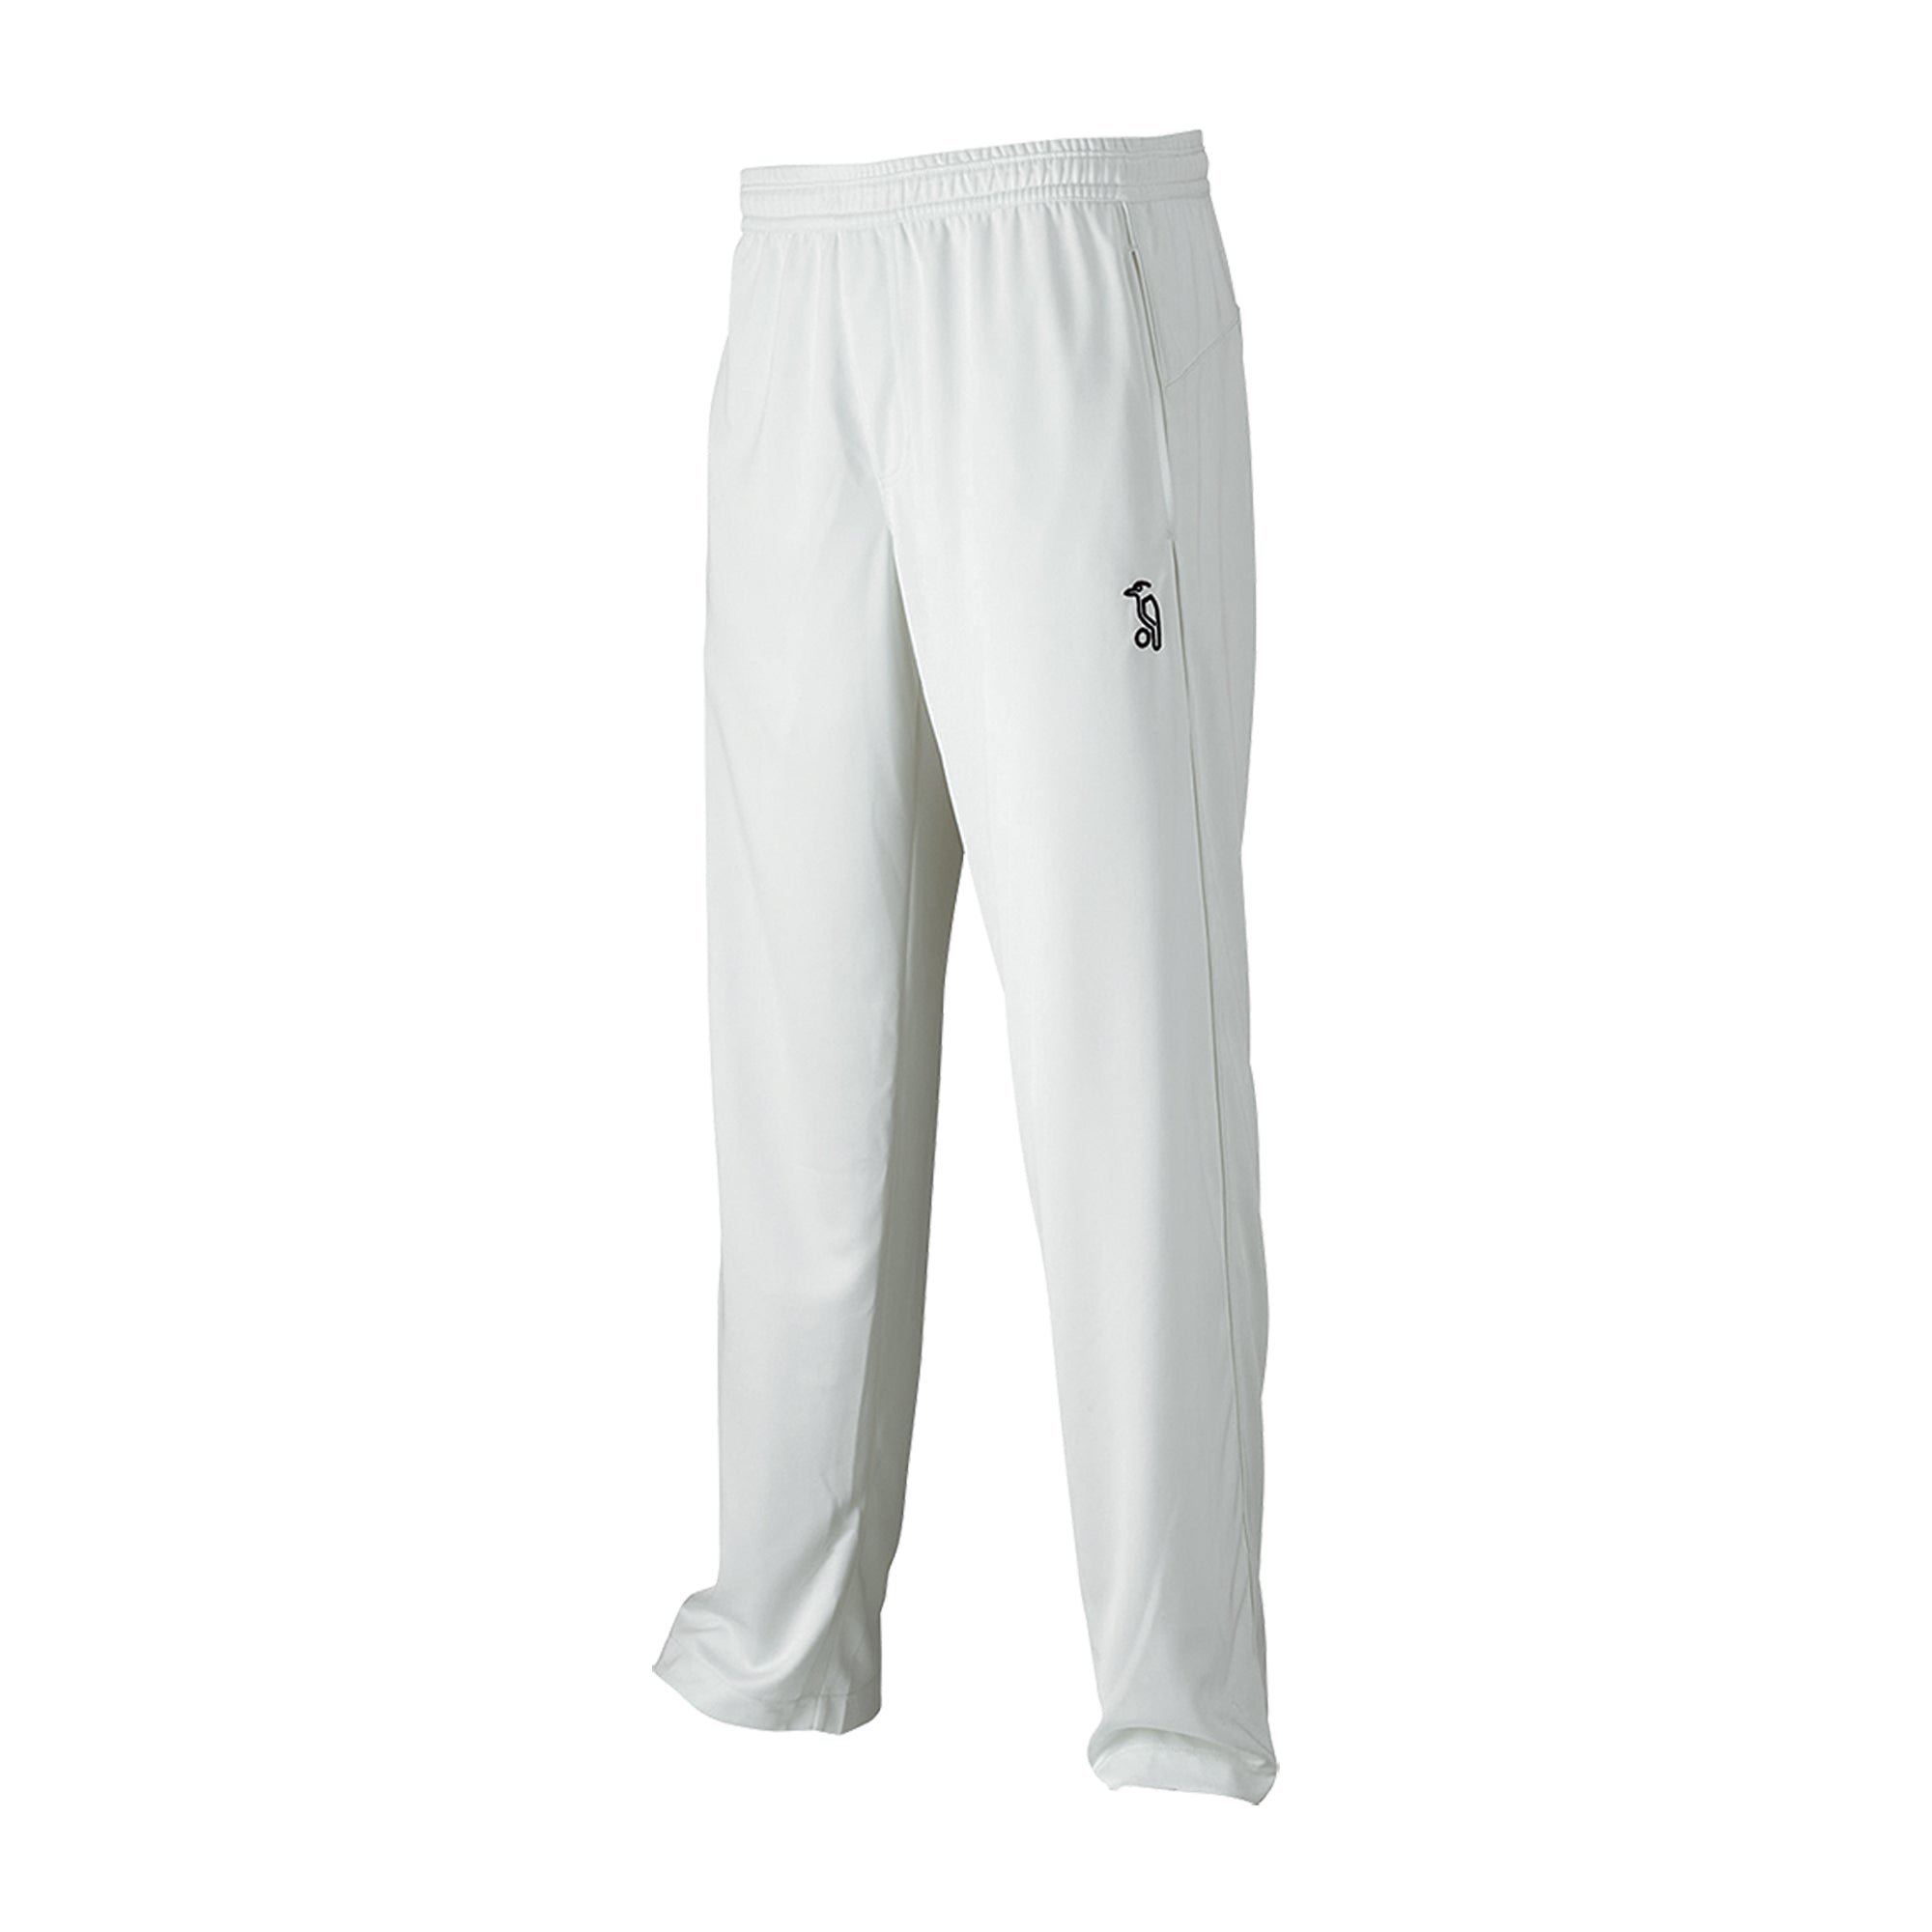 Premium White Cricket Trouser/Pants